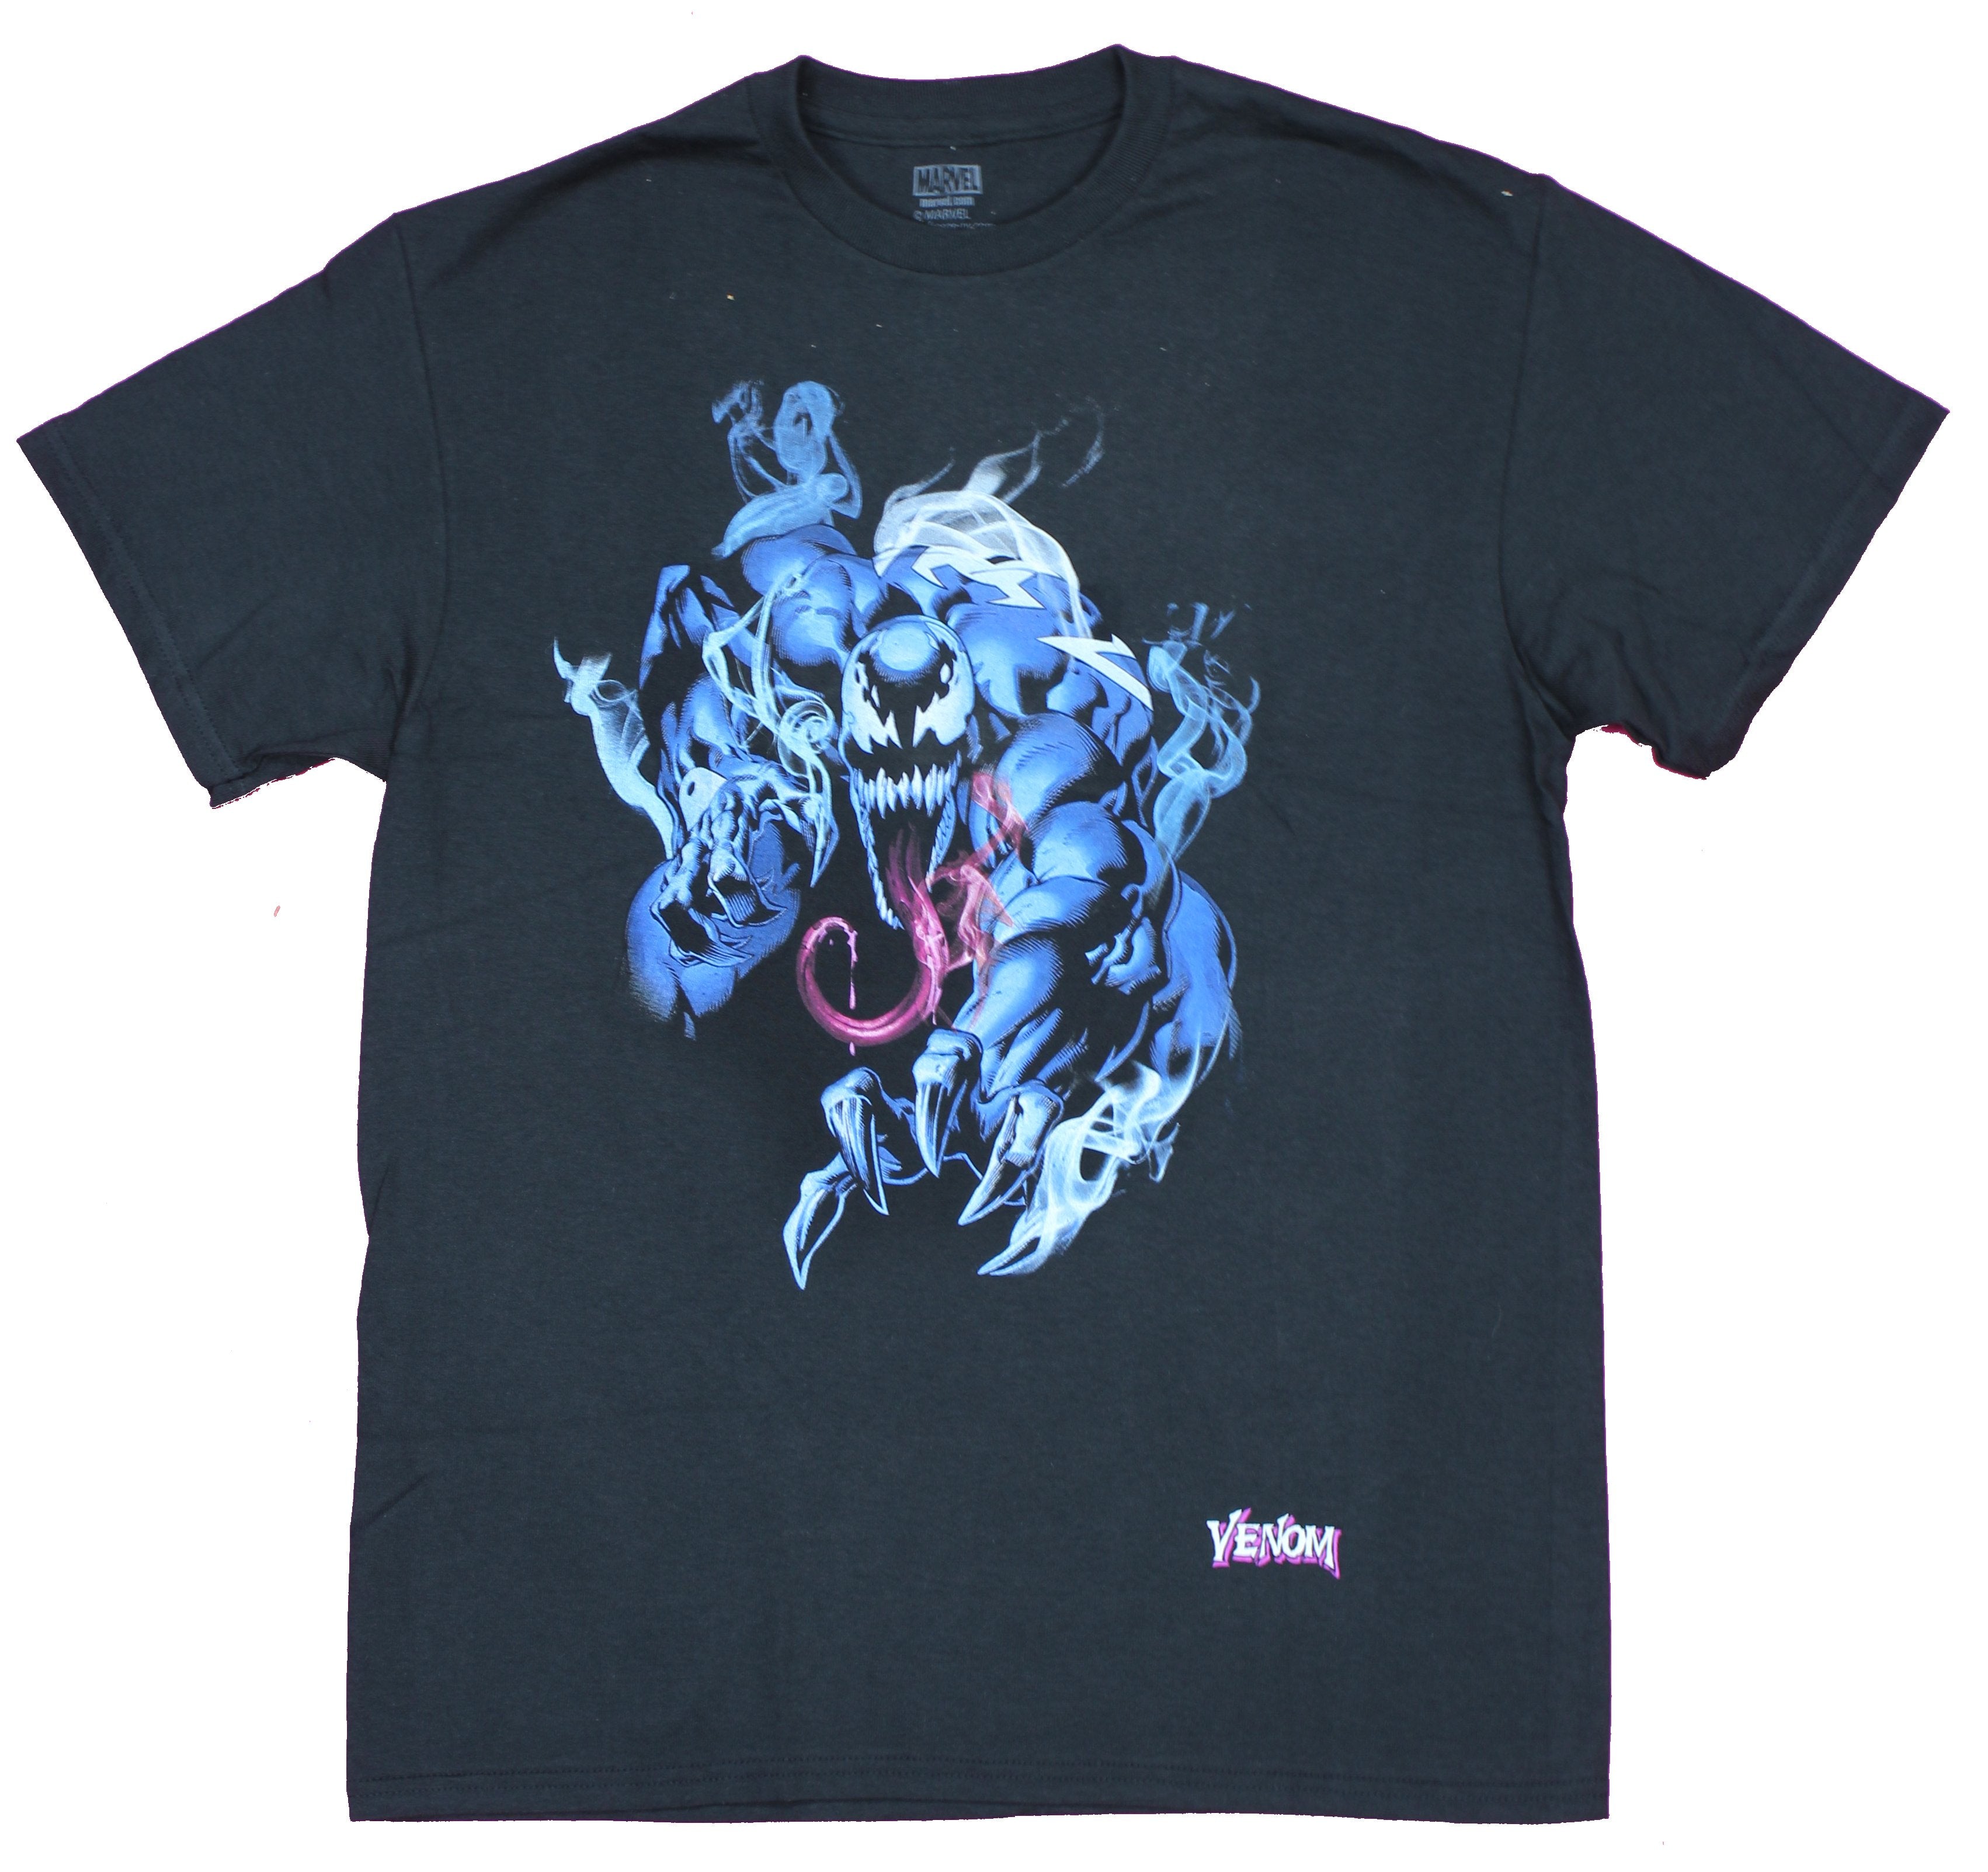 Venom Mens T-Shirt - Smokey Styled Diving Attack Image